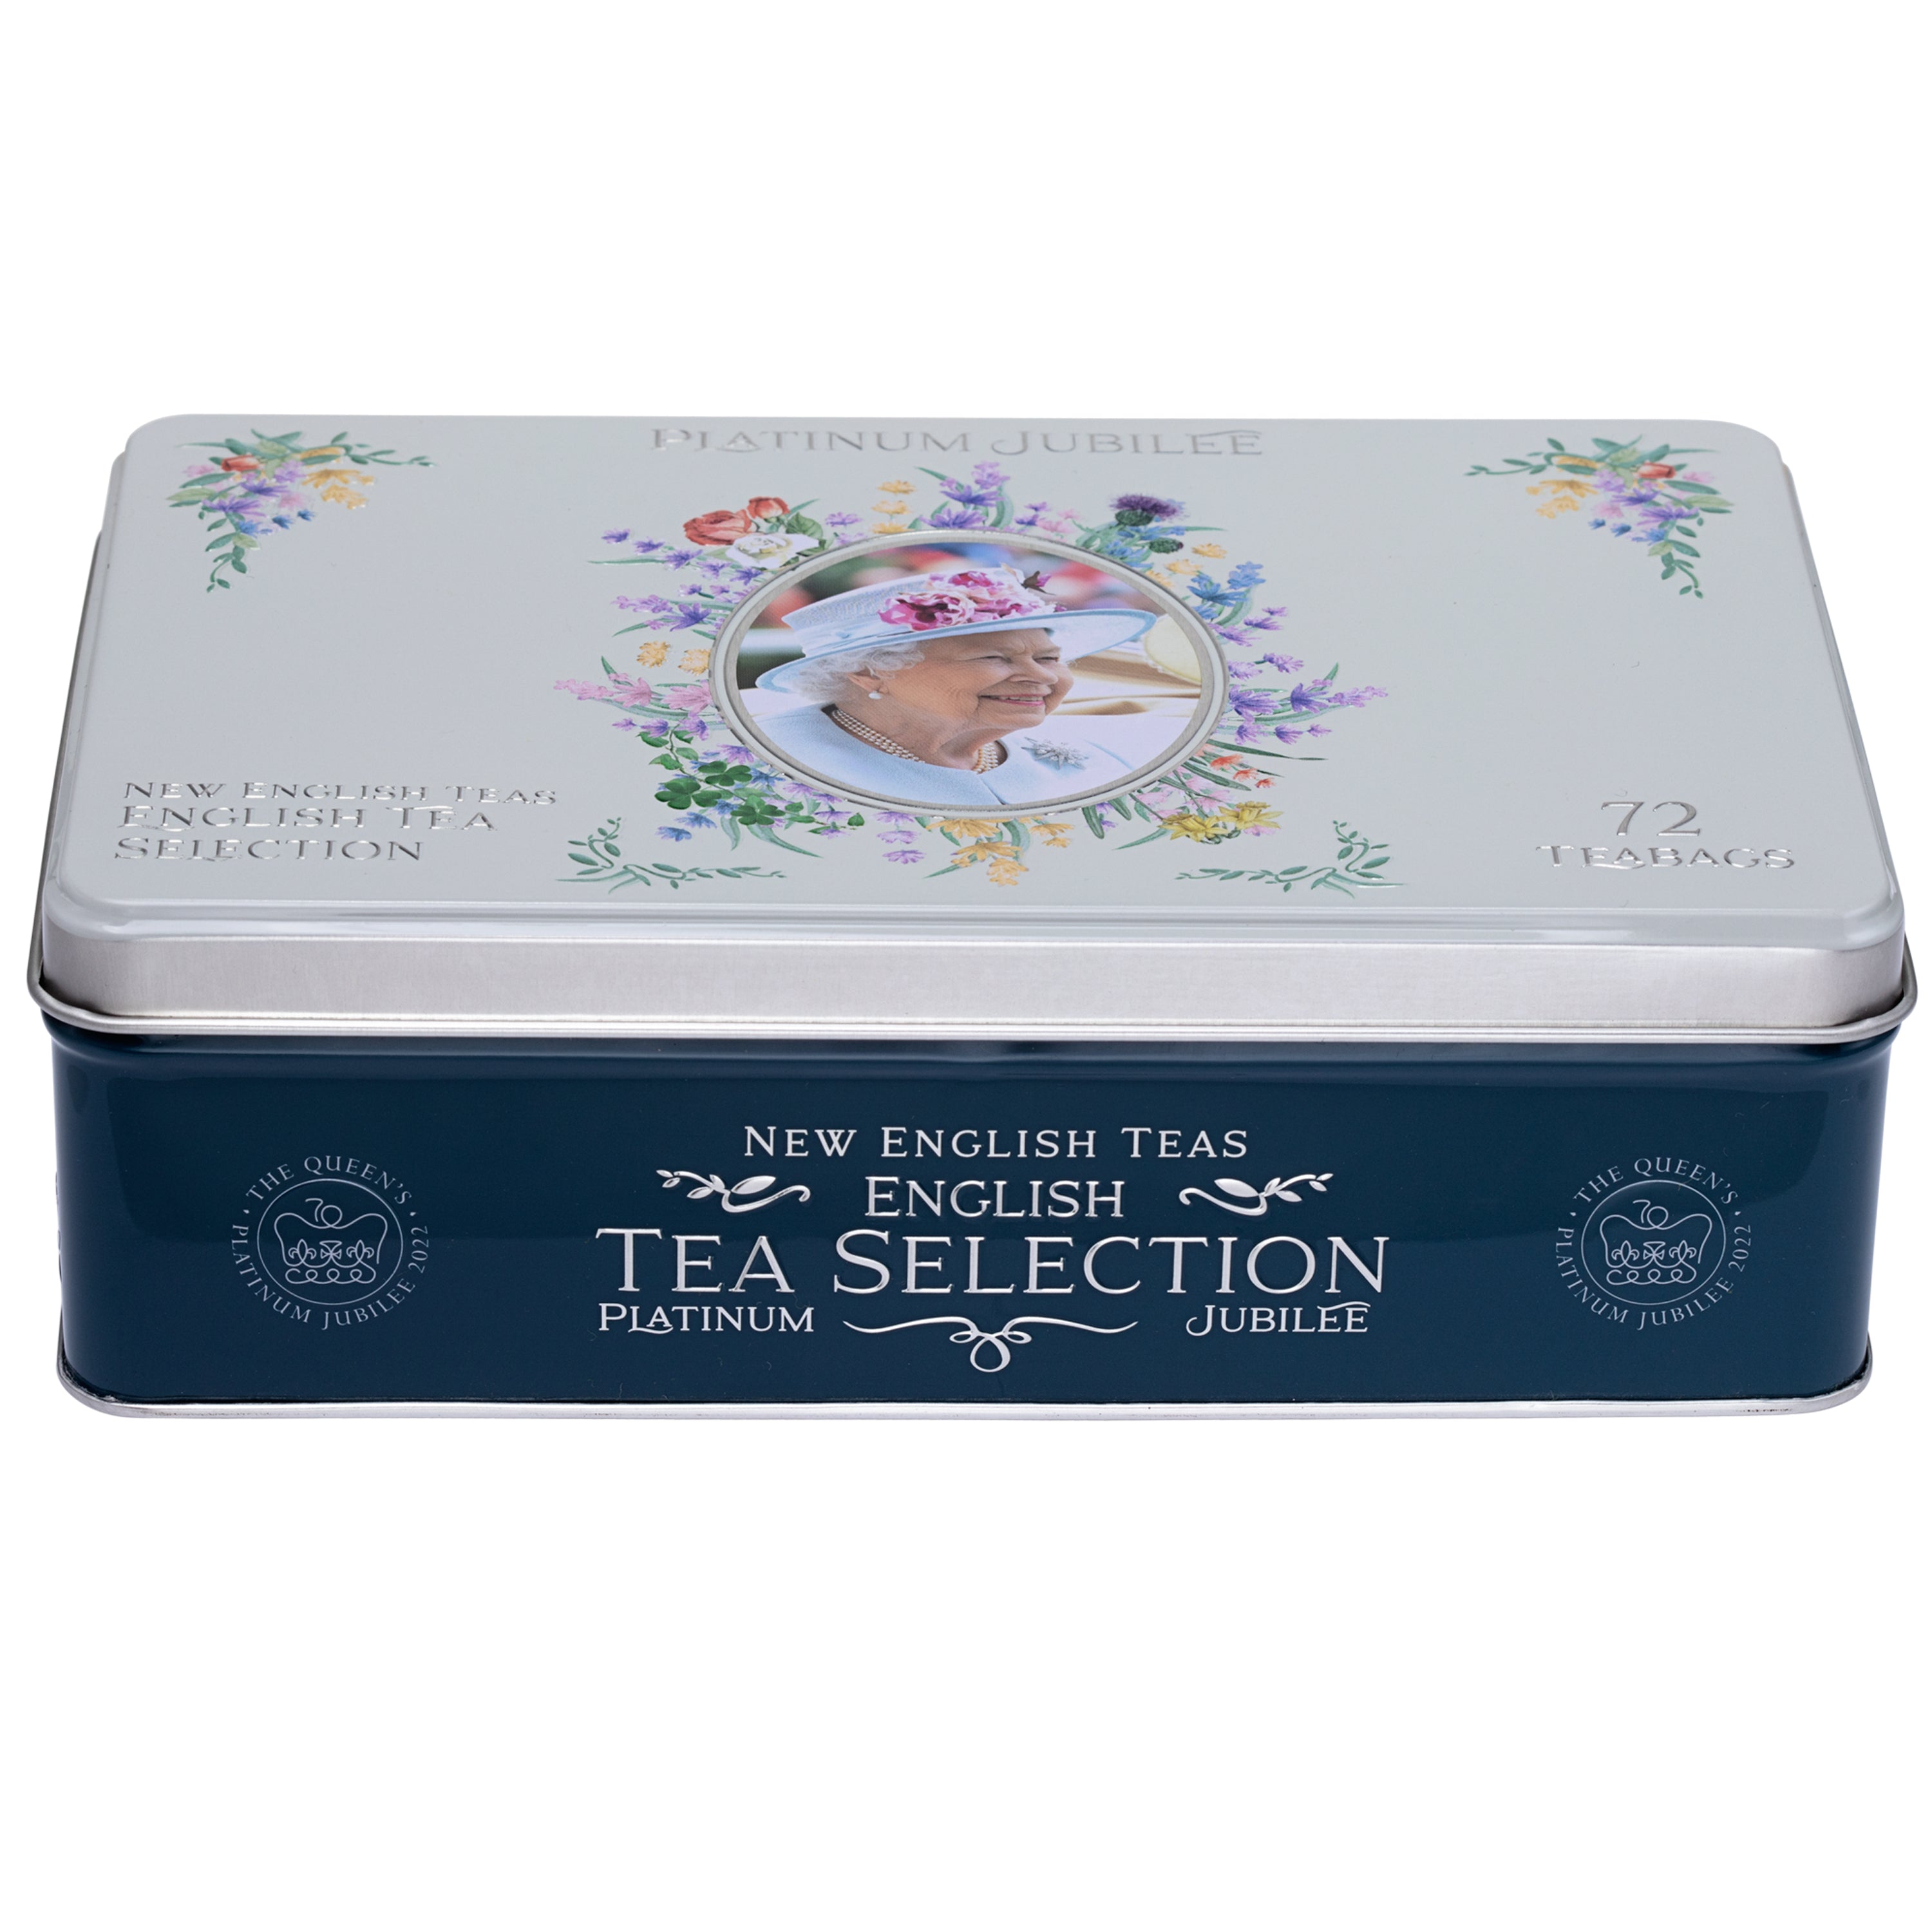 Queen Elizabeth II Platinum Jubilee Tea Tin with 72 English Teabag Selection Black Tea New English Teas 